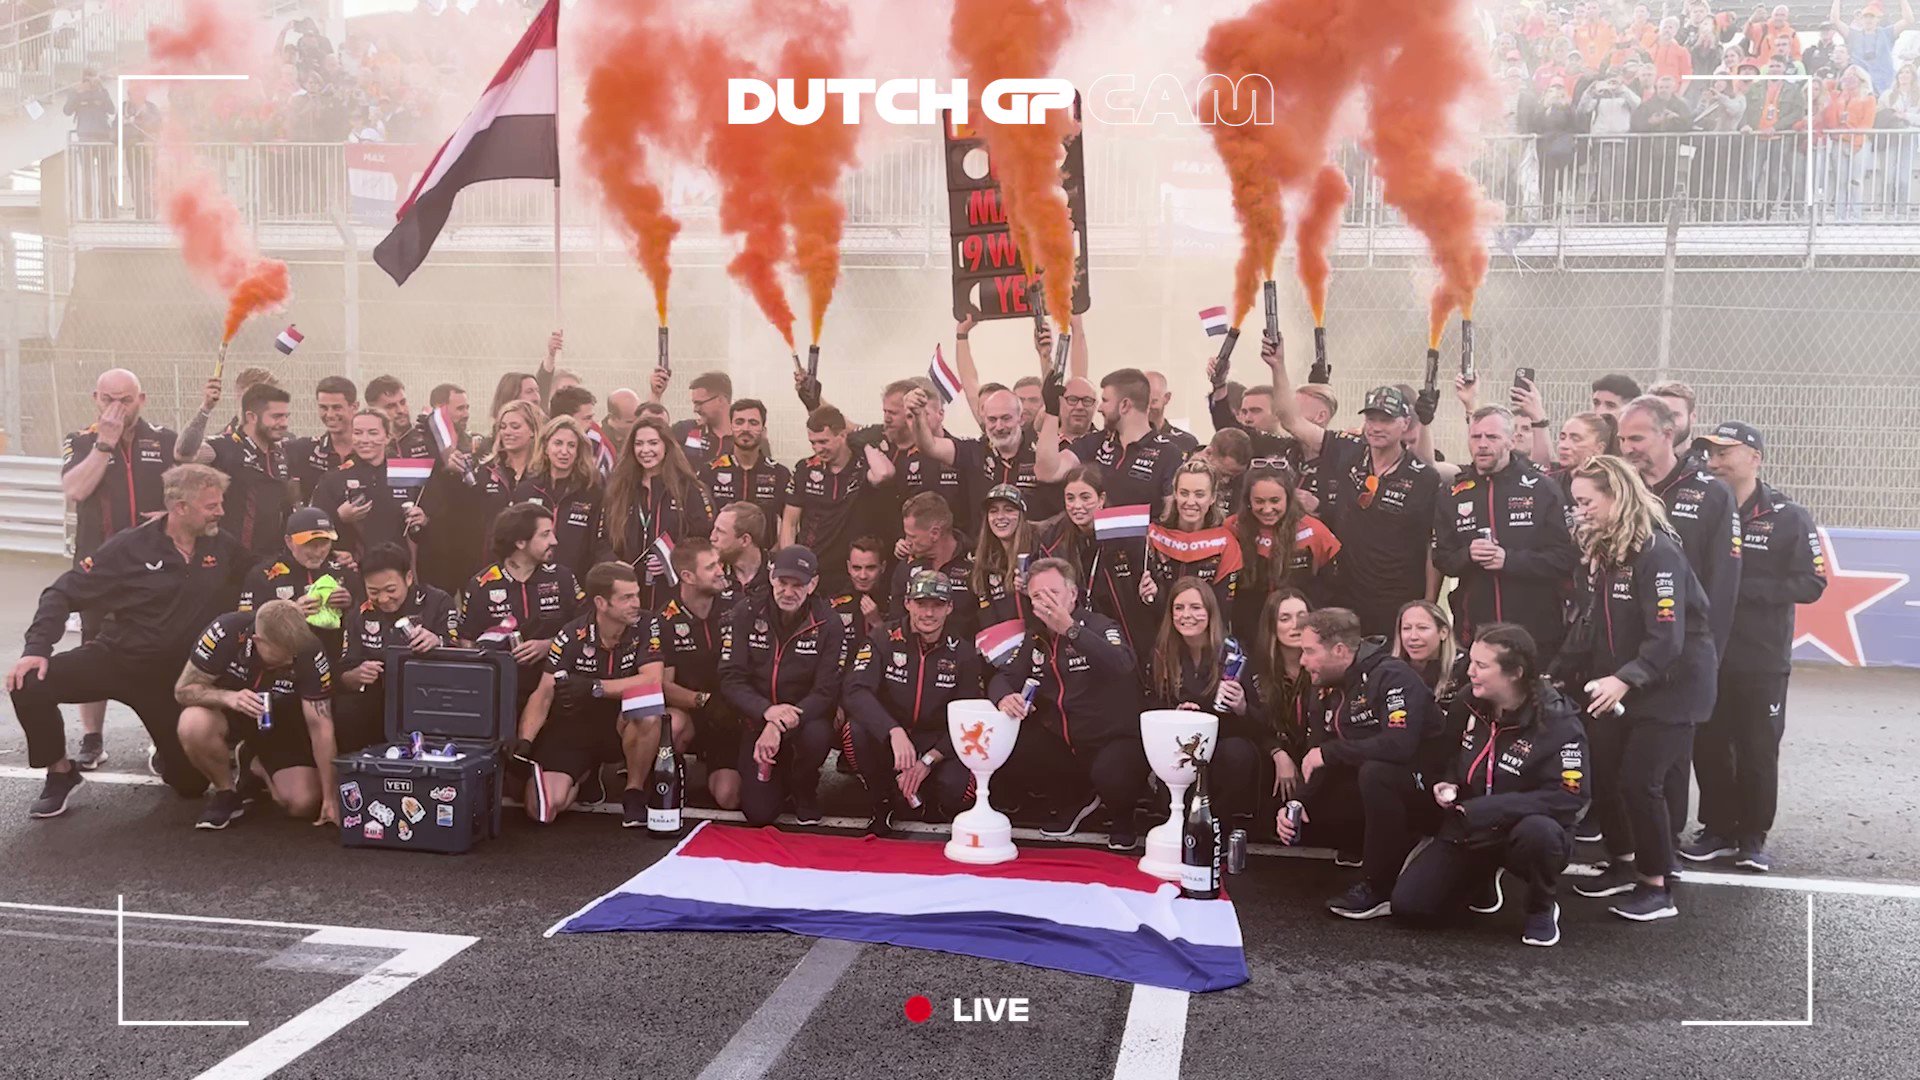 Dutch Grand Prix on X